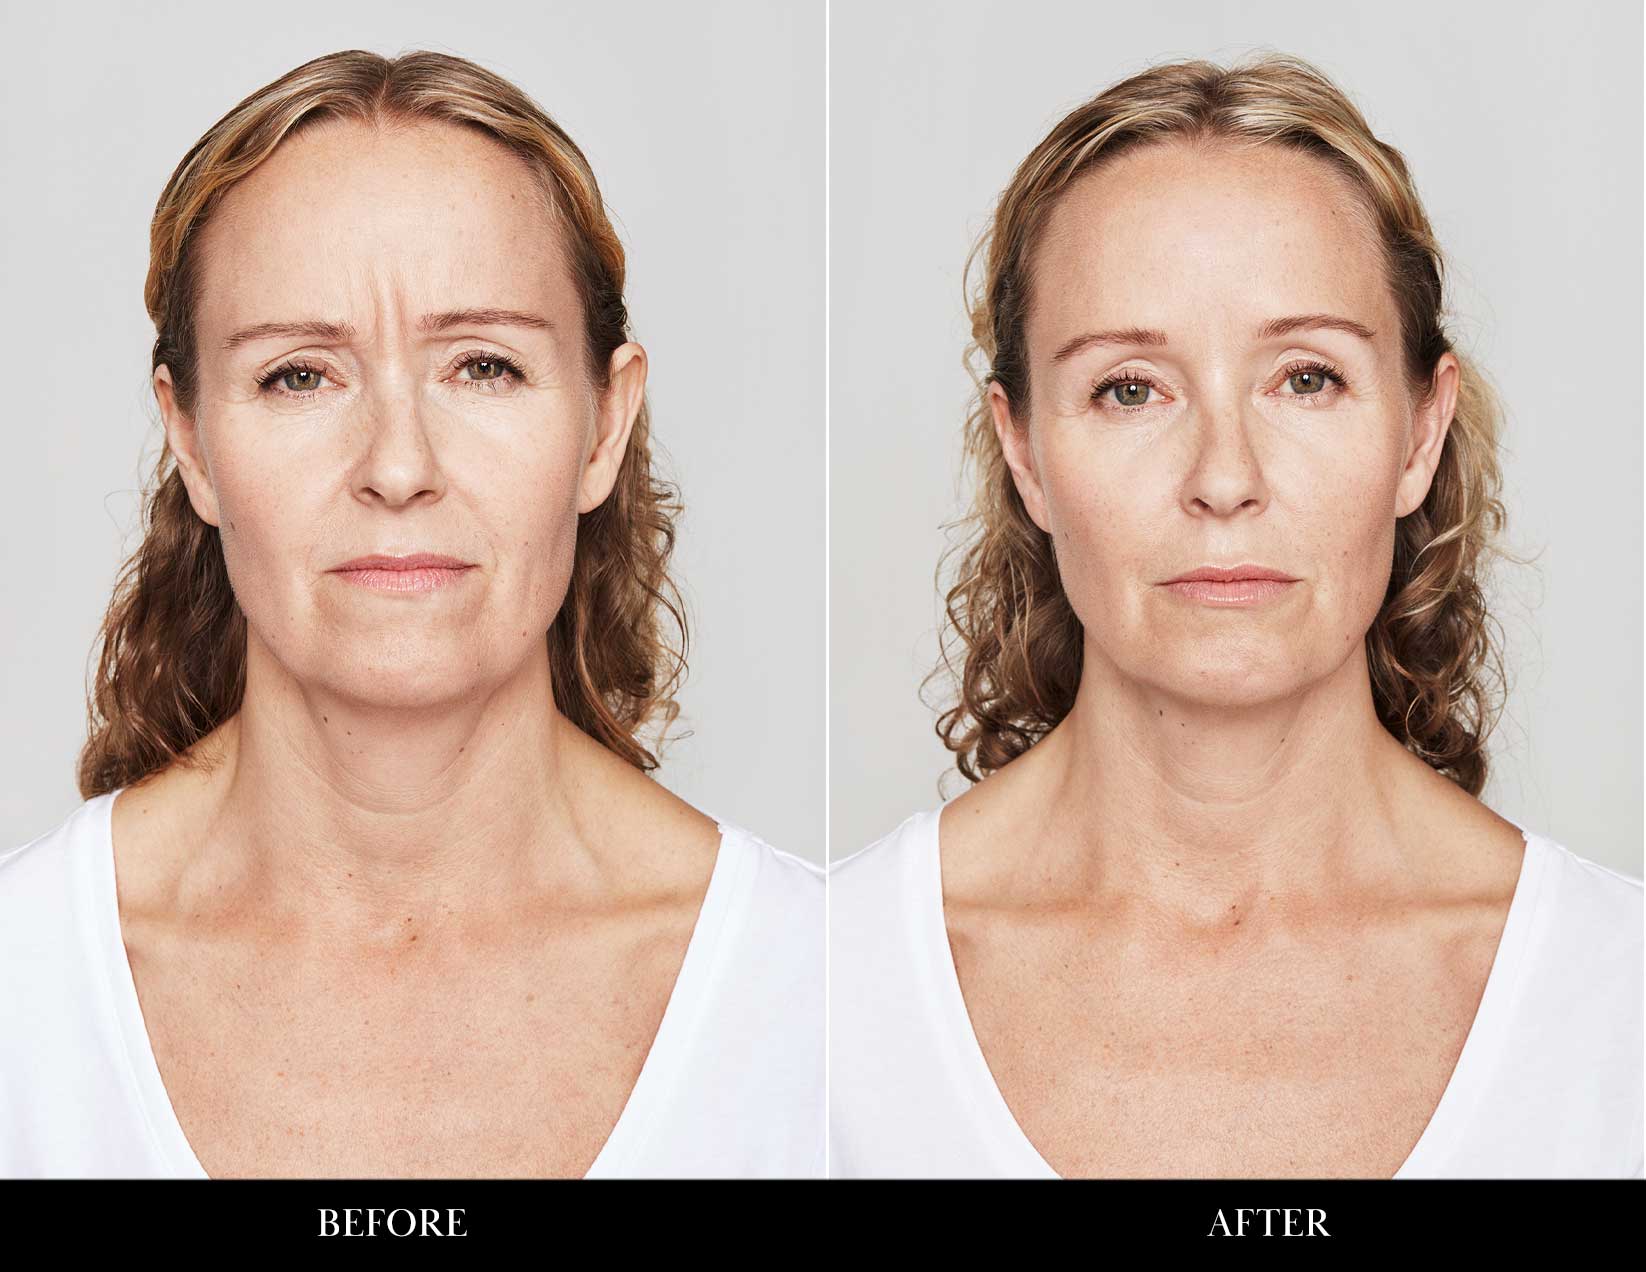 Laser rejuvenation before and after pictures.